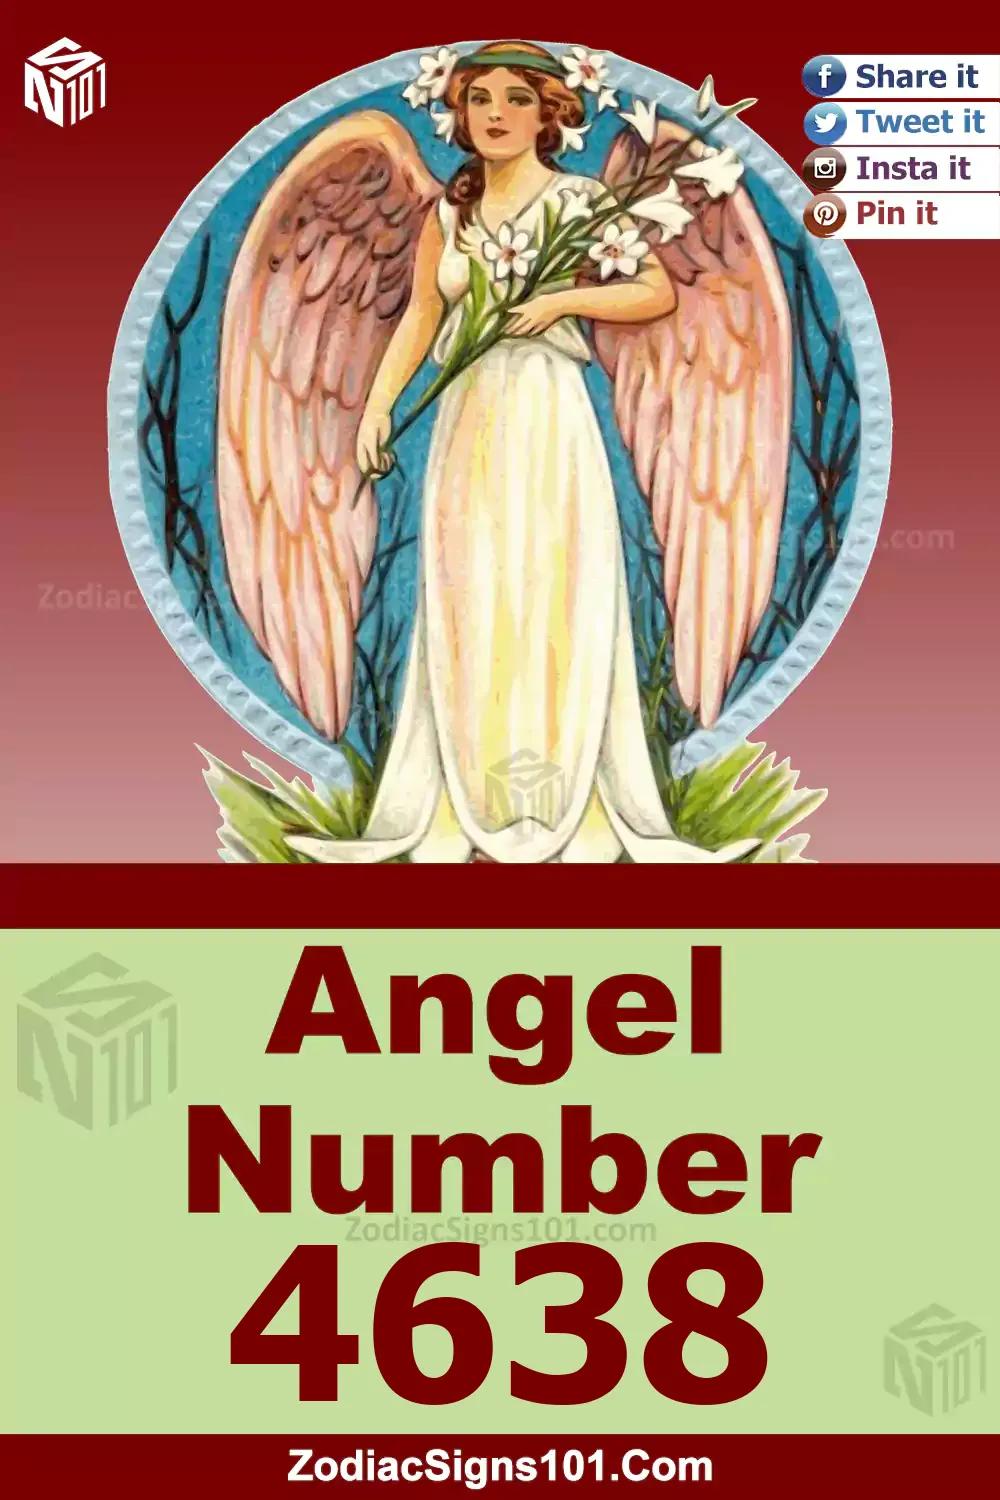 4638-Angel-Number-Meaning.jpg